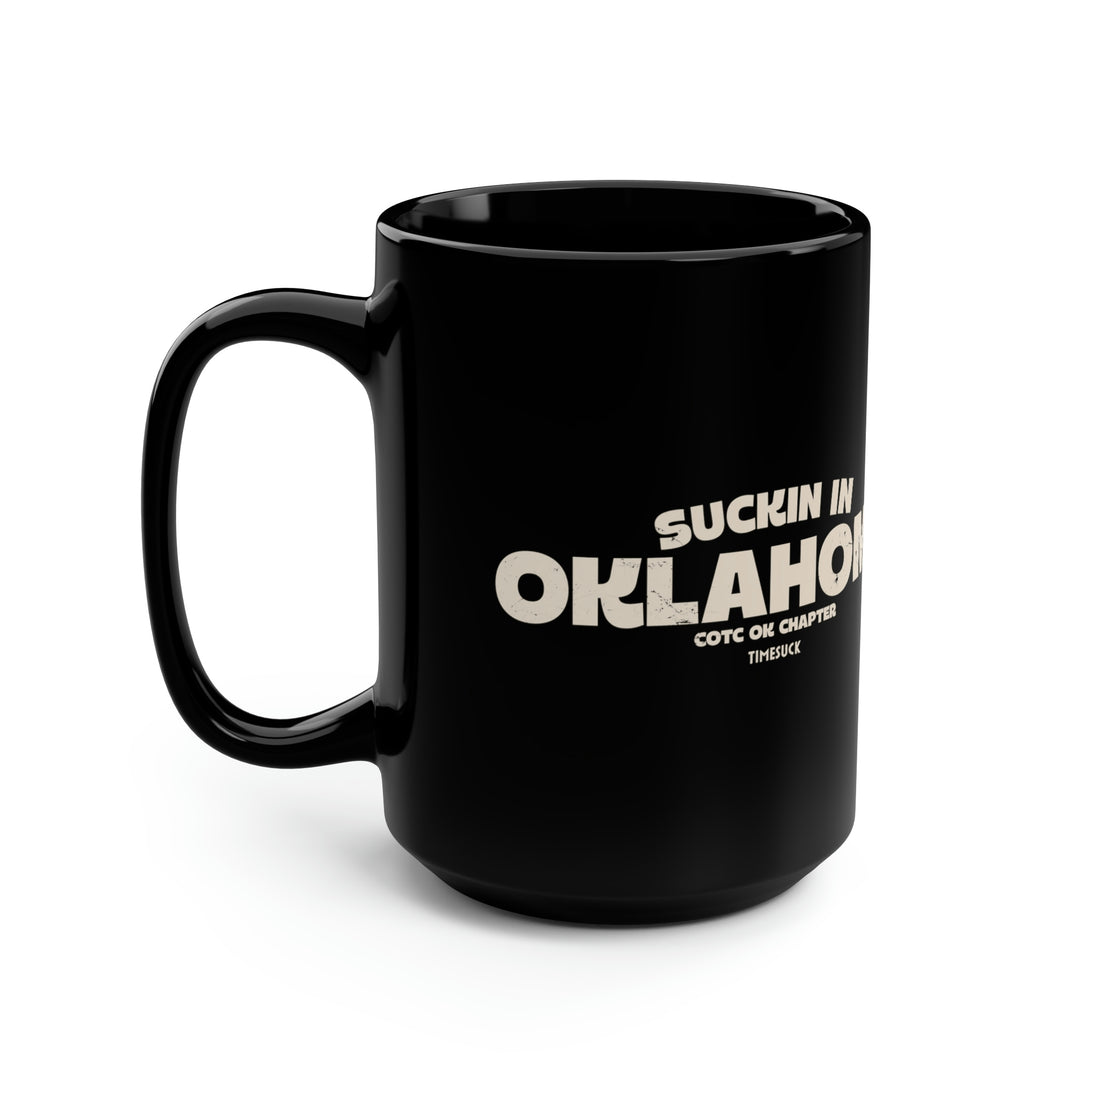 Oklahoma Cult Mug